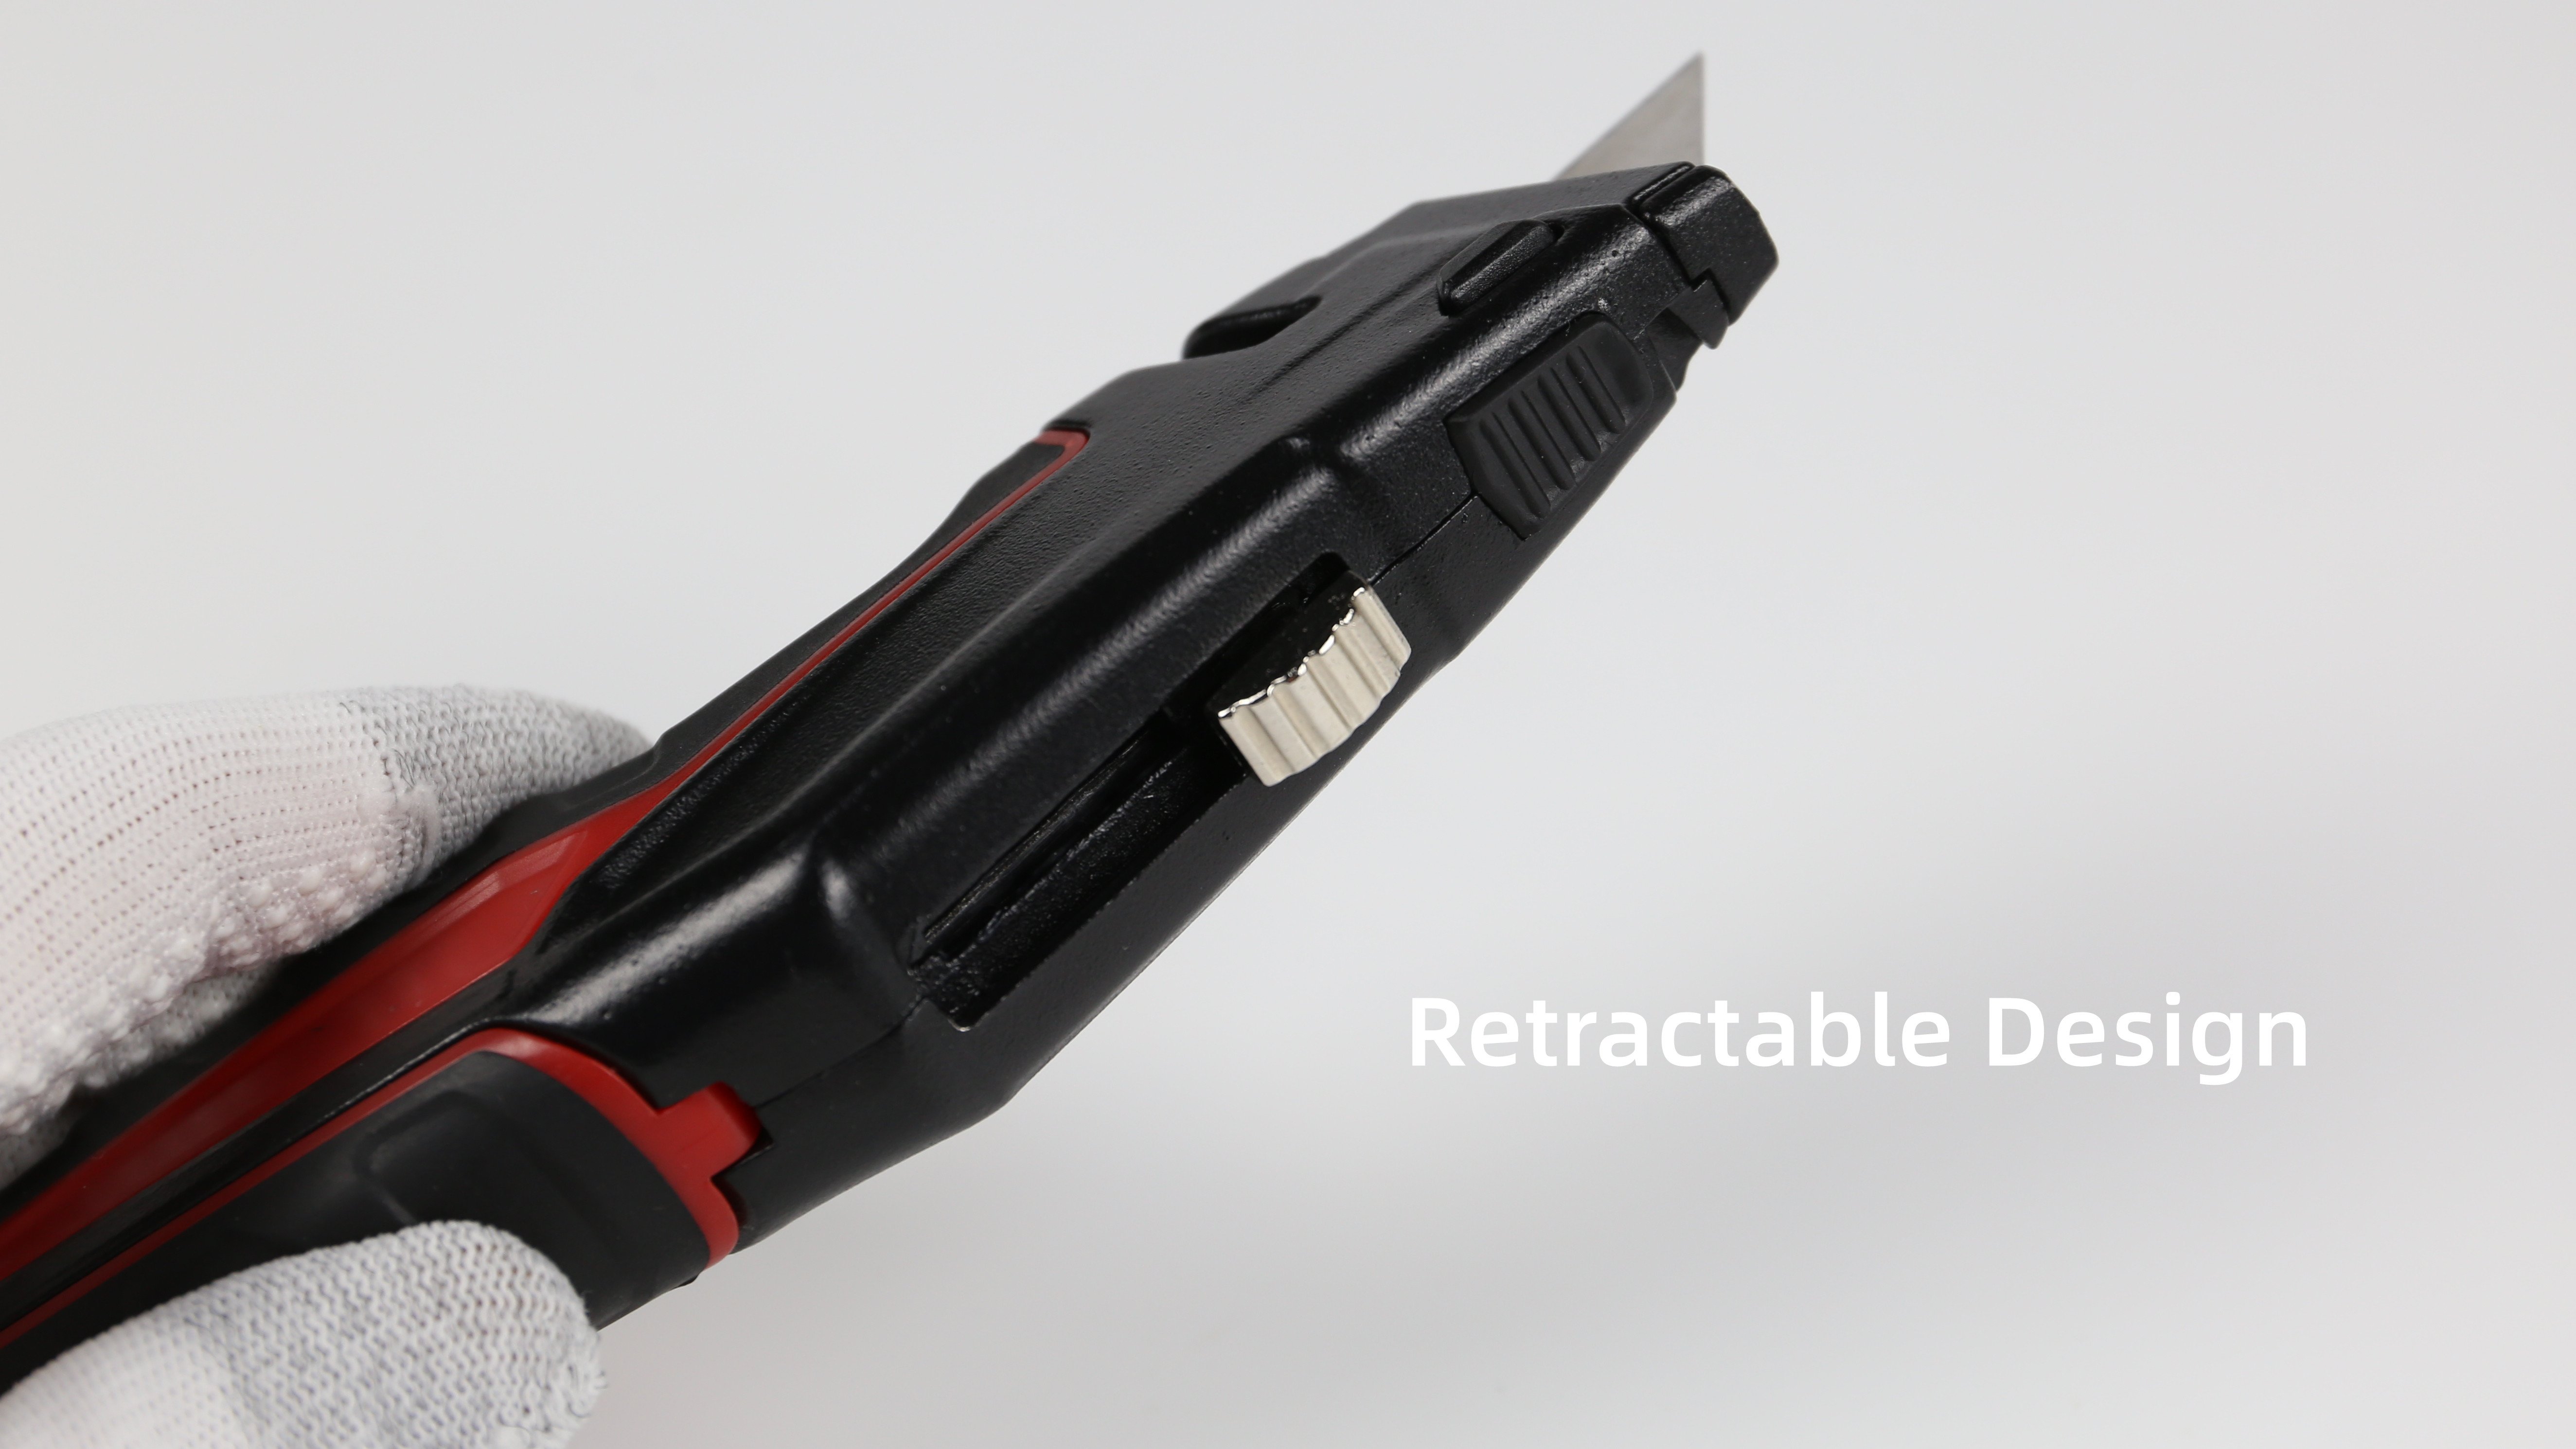 utility knife has retractable design